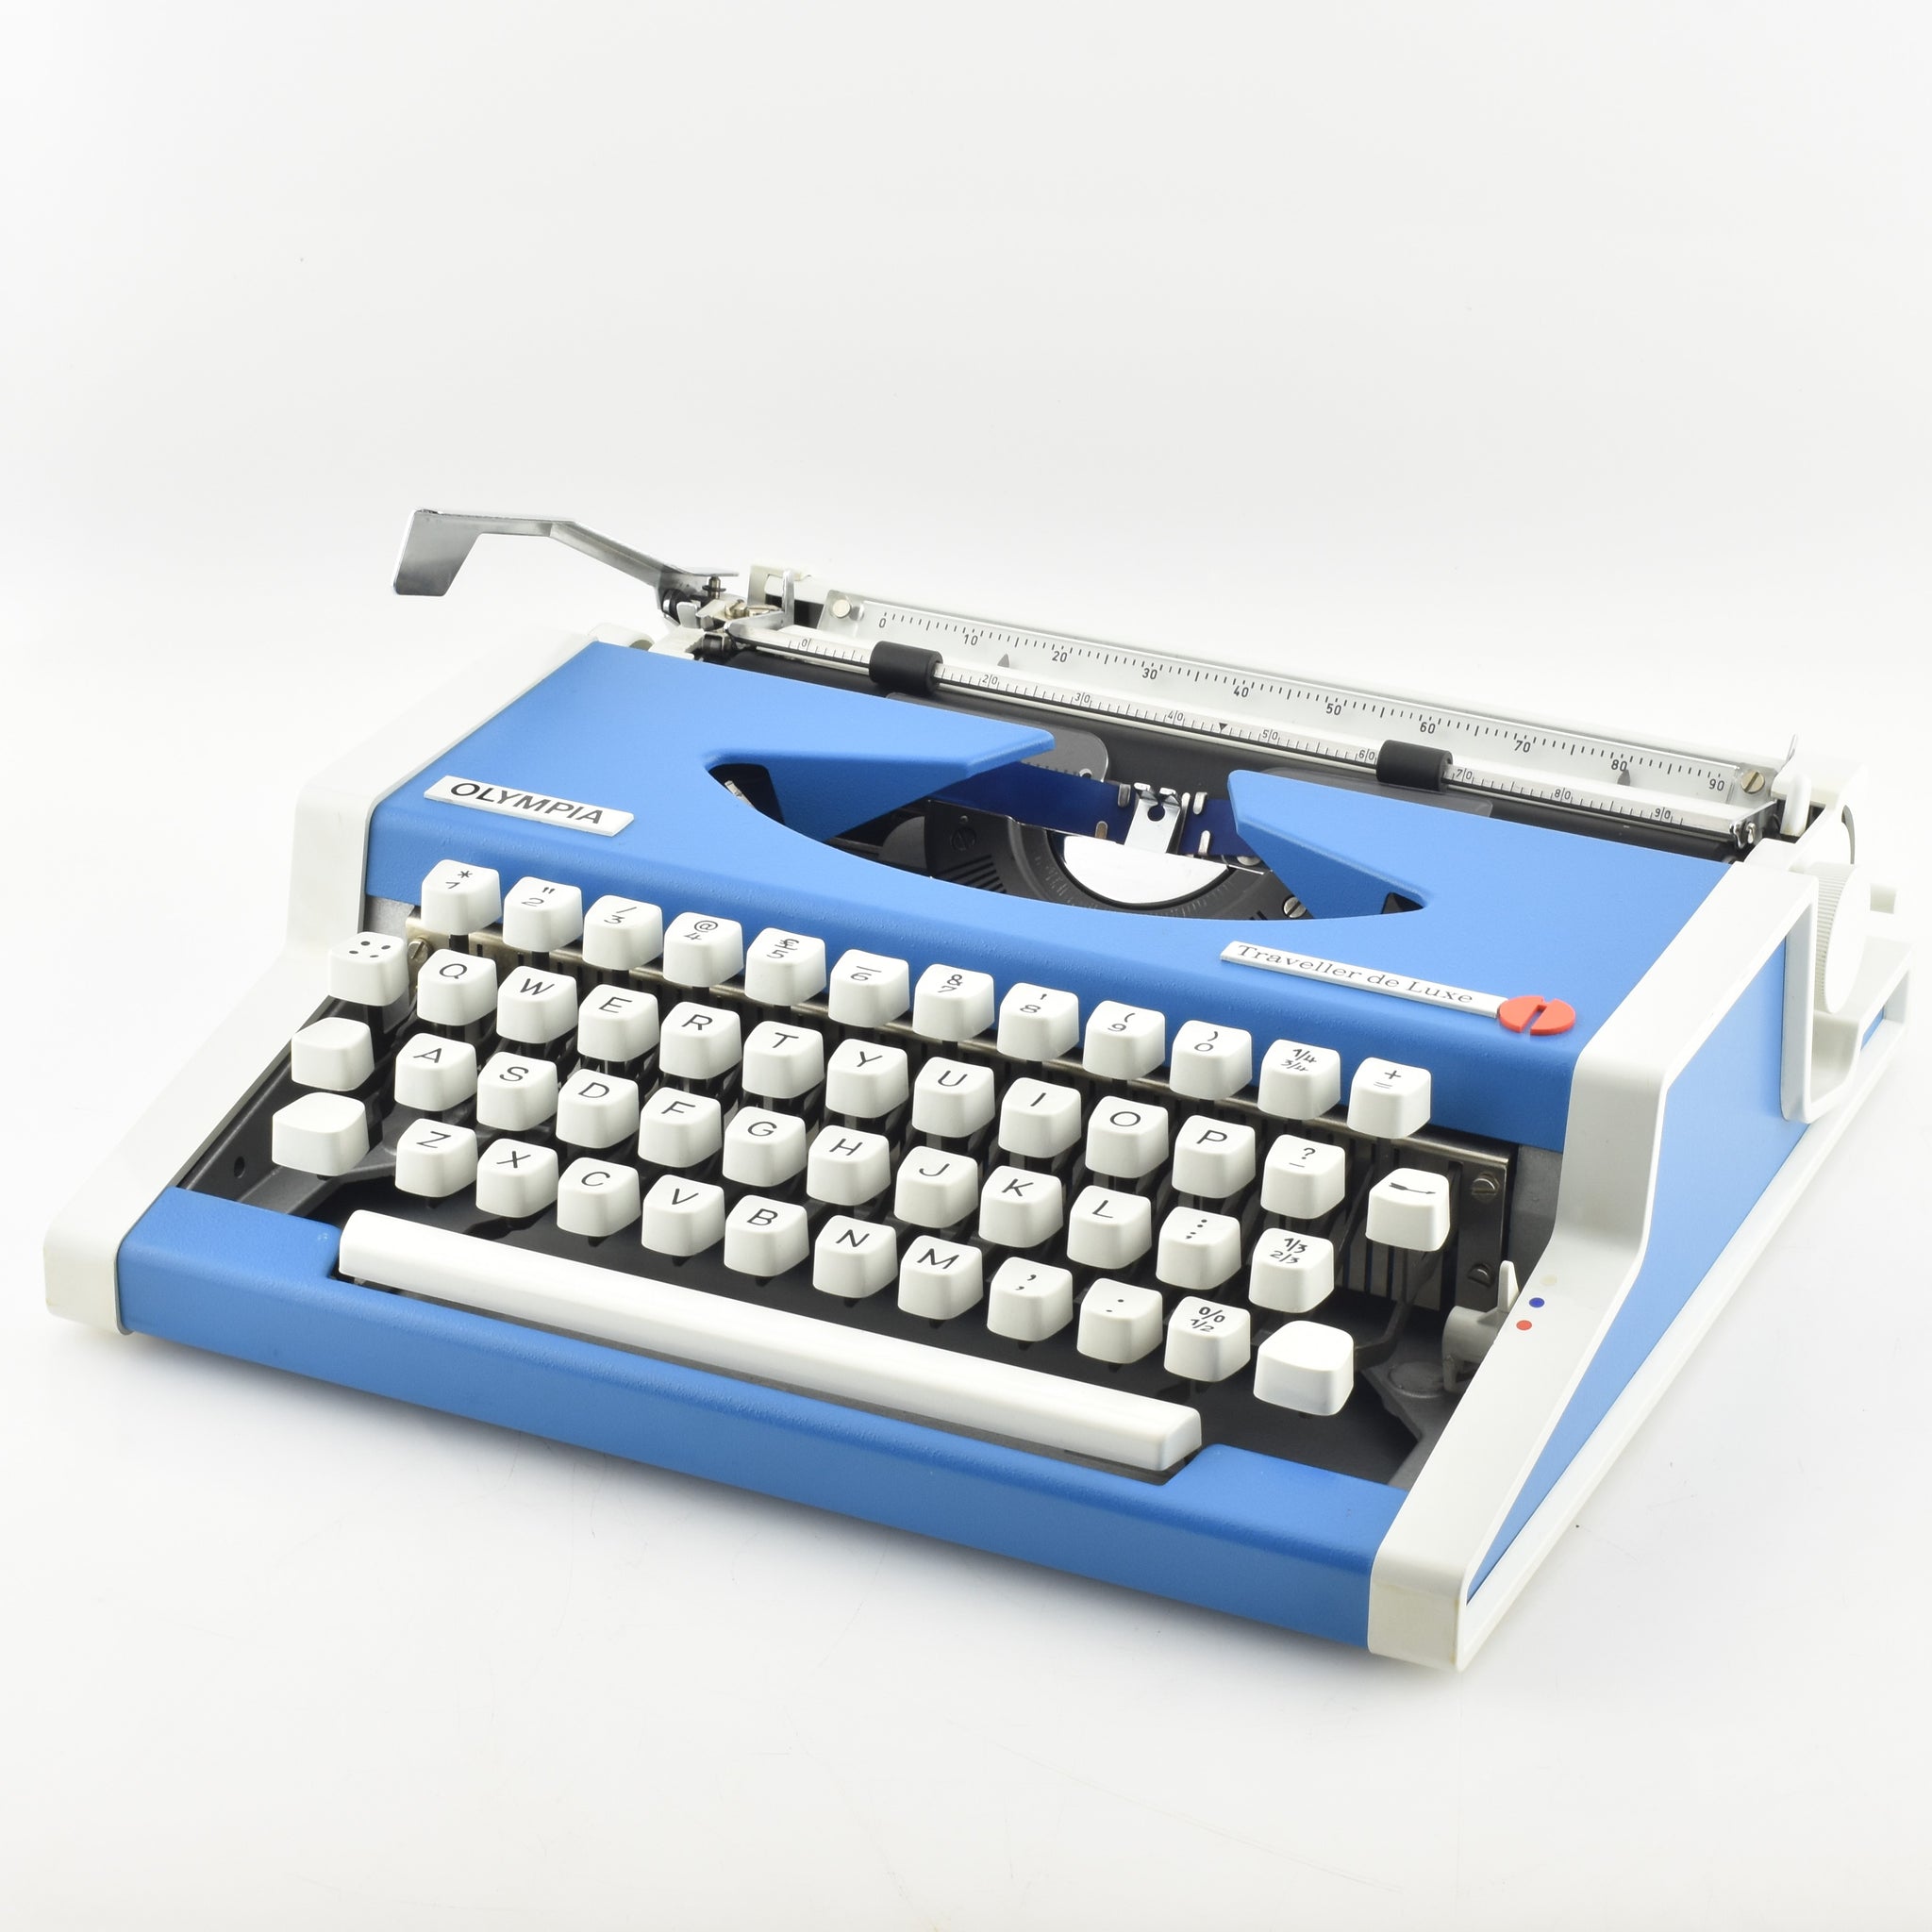 olympia traveller deluxe typewriter